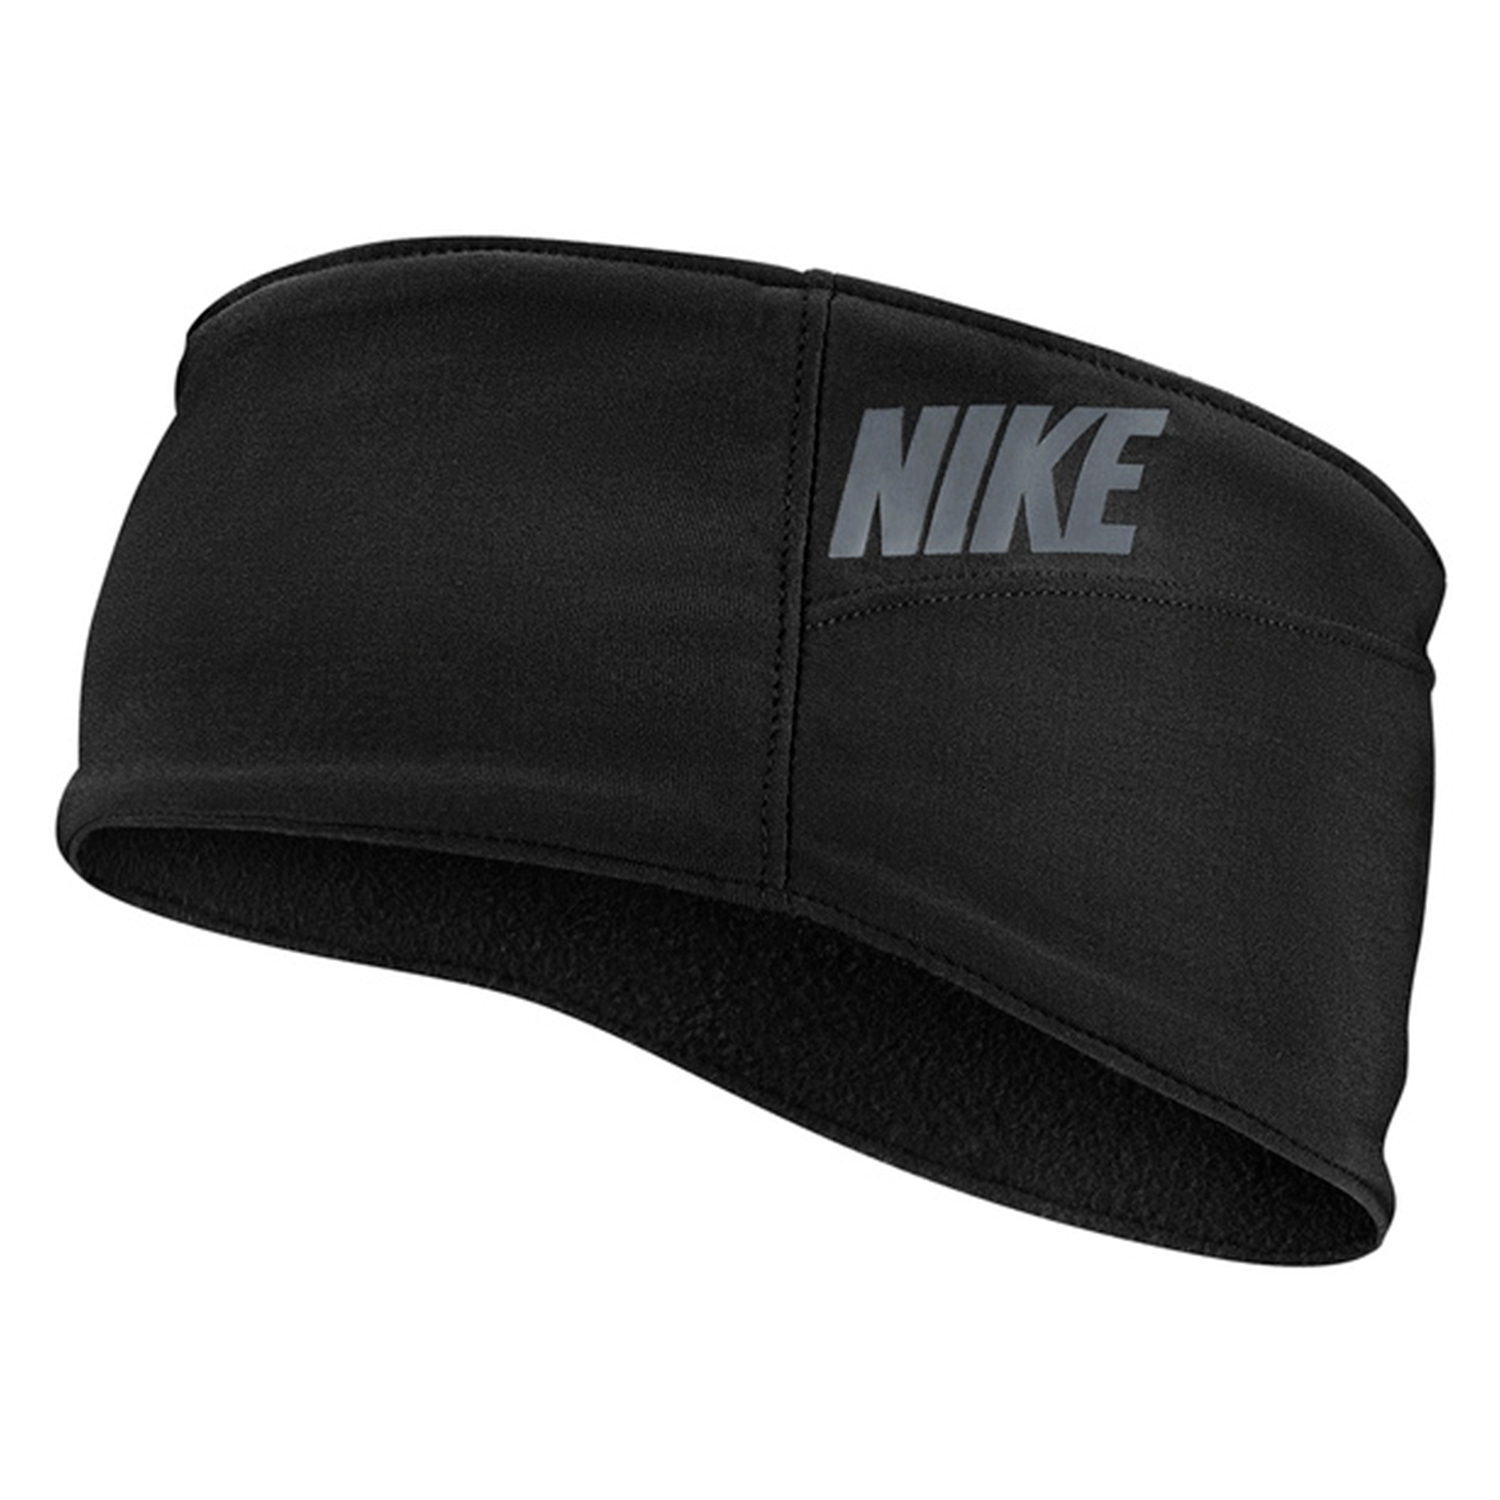 Nike Men's Running Headband - Black/White